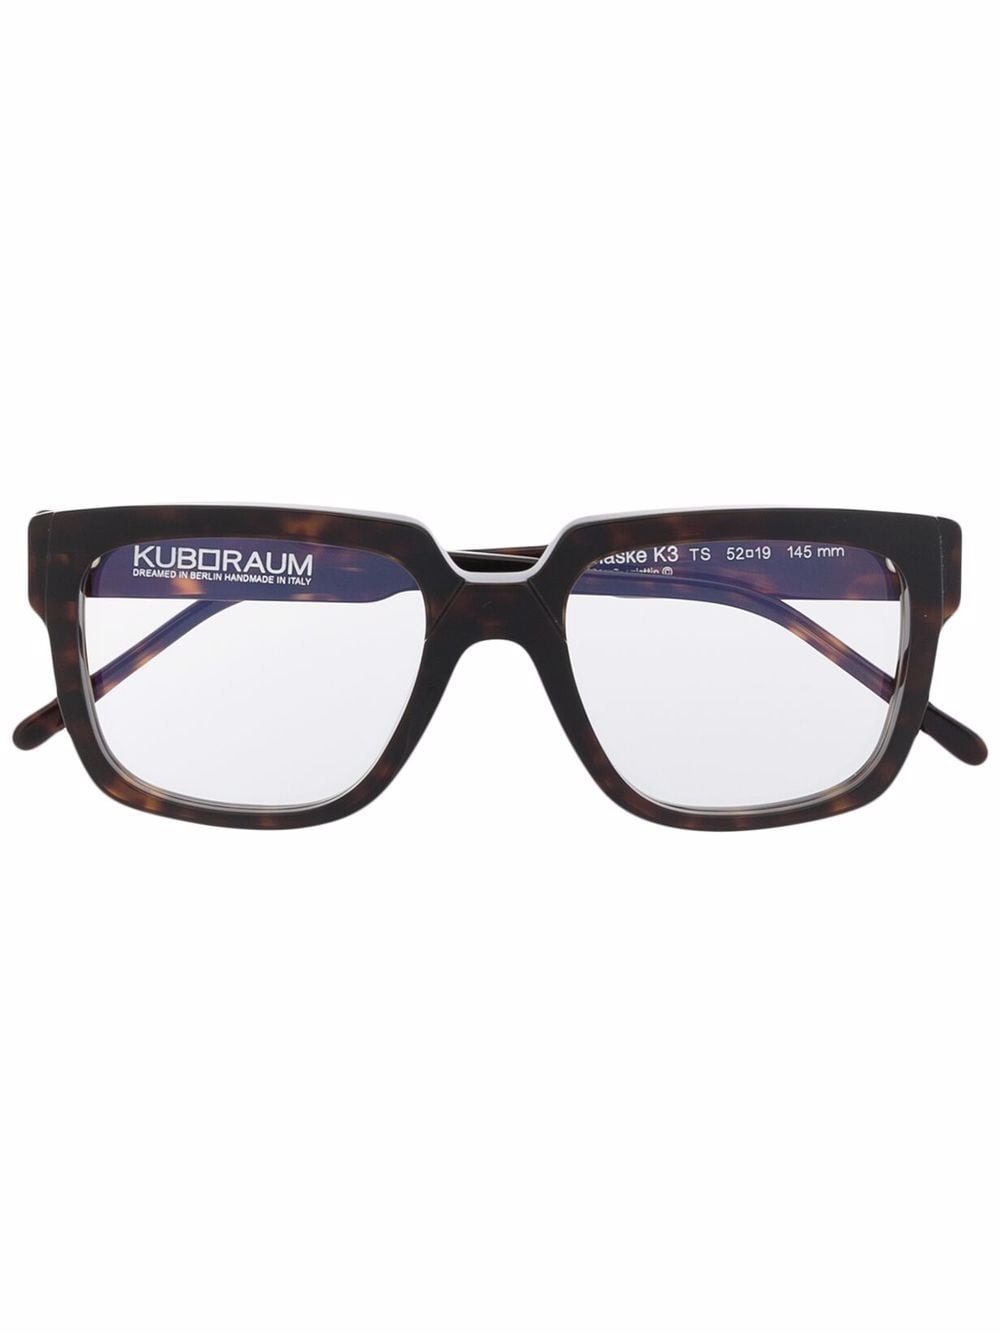 Kuboraum K3 square-frame glasses - Brown von Kuboraum